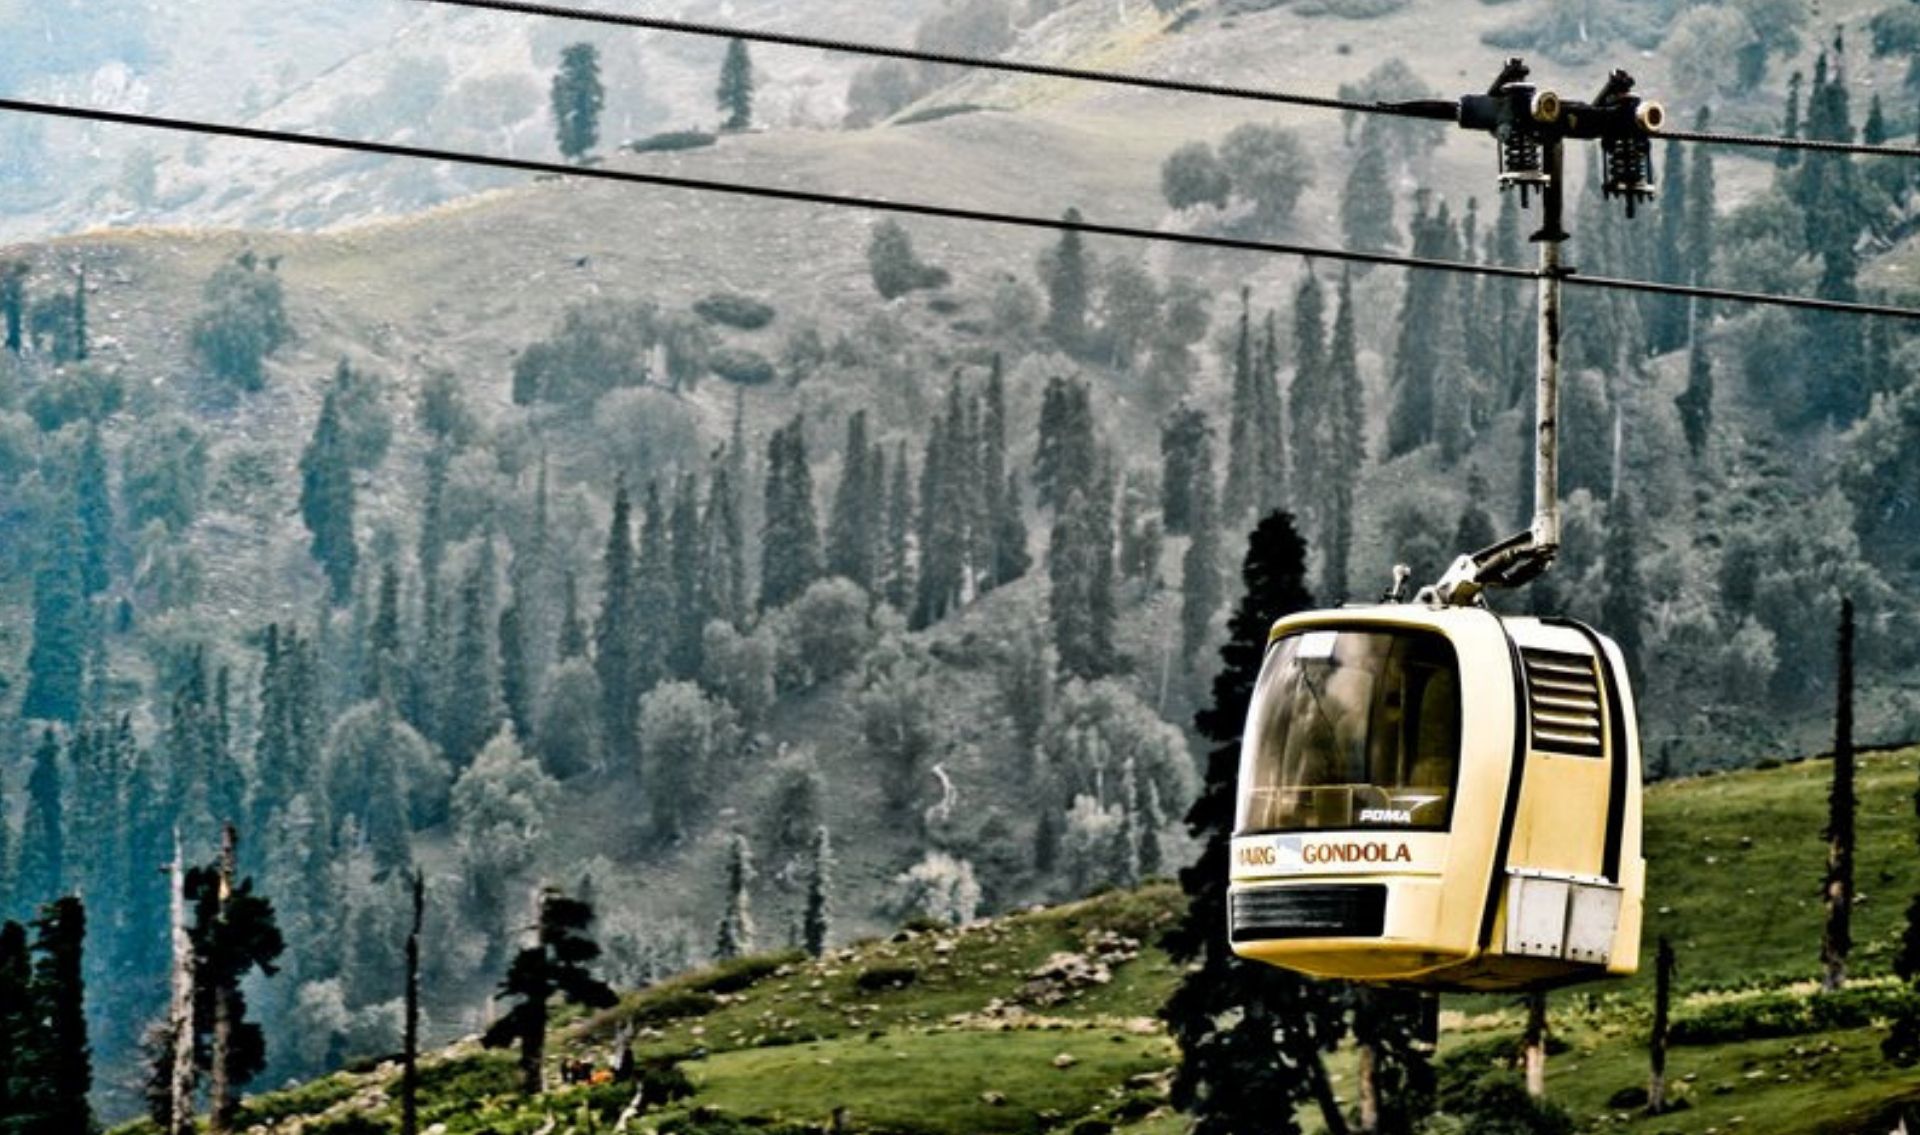 gondola-ride-in-kashmir-banner.jpg